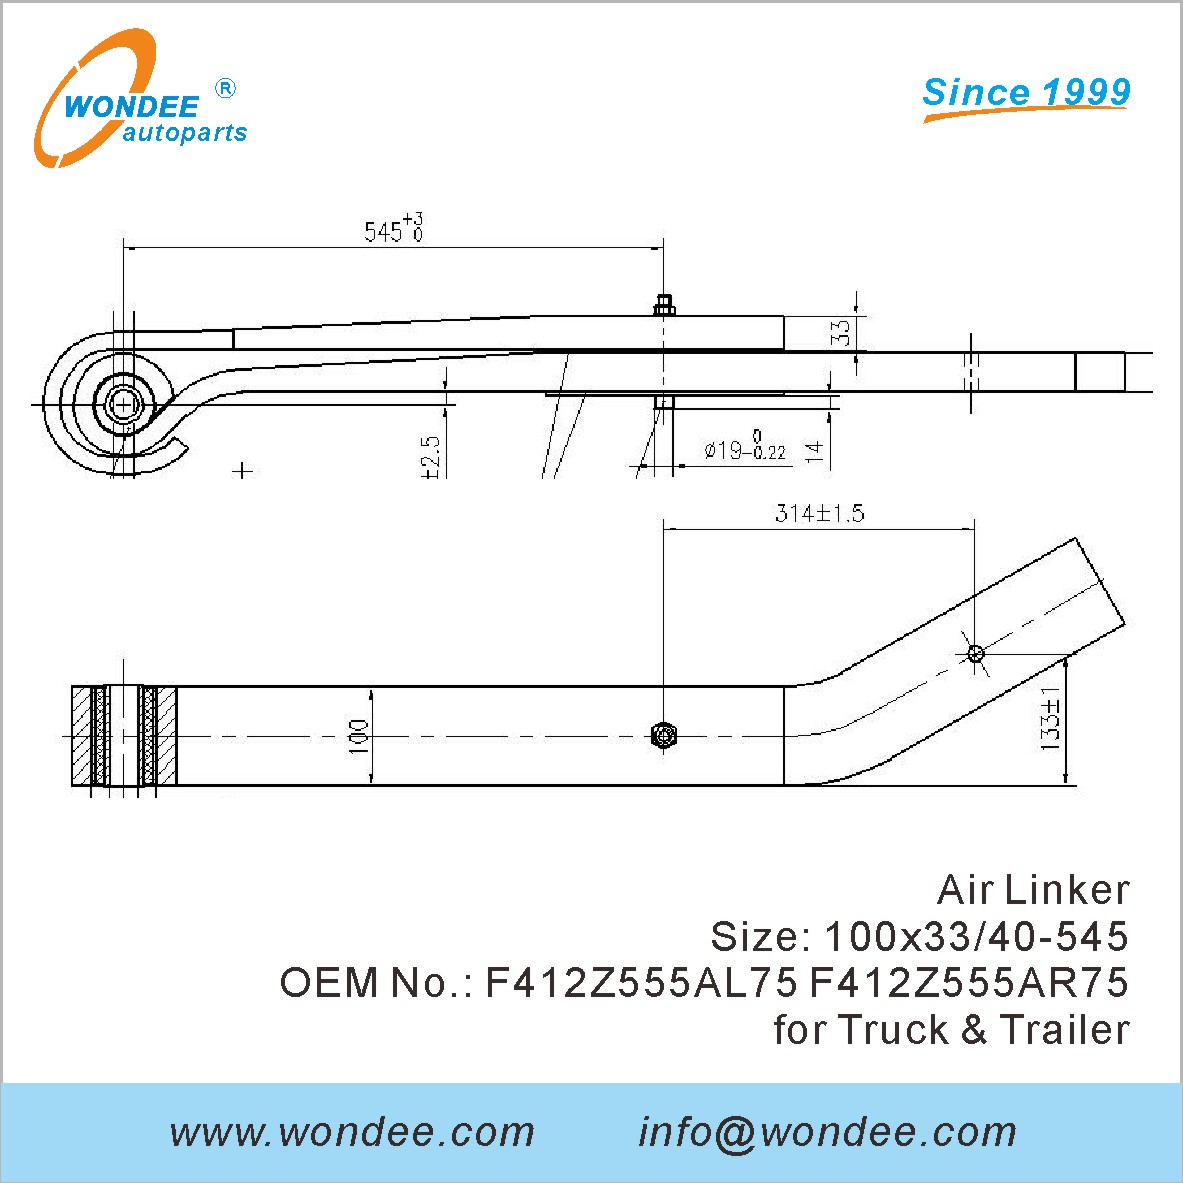 WONDEE Autoparts Air Linker OEM F412Z555AL75 F412Z555AR75 for Truck & Trailer